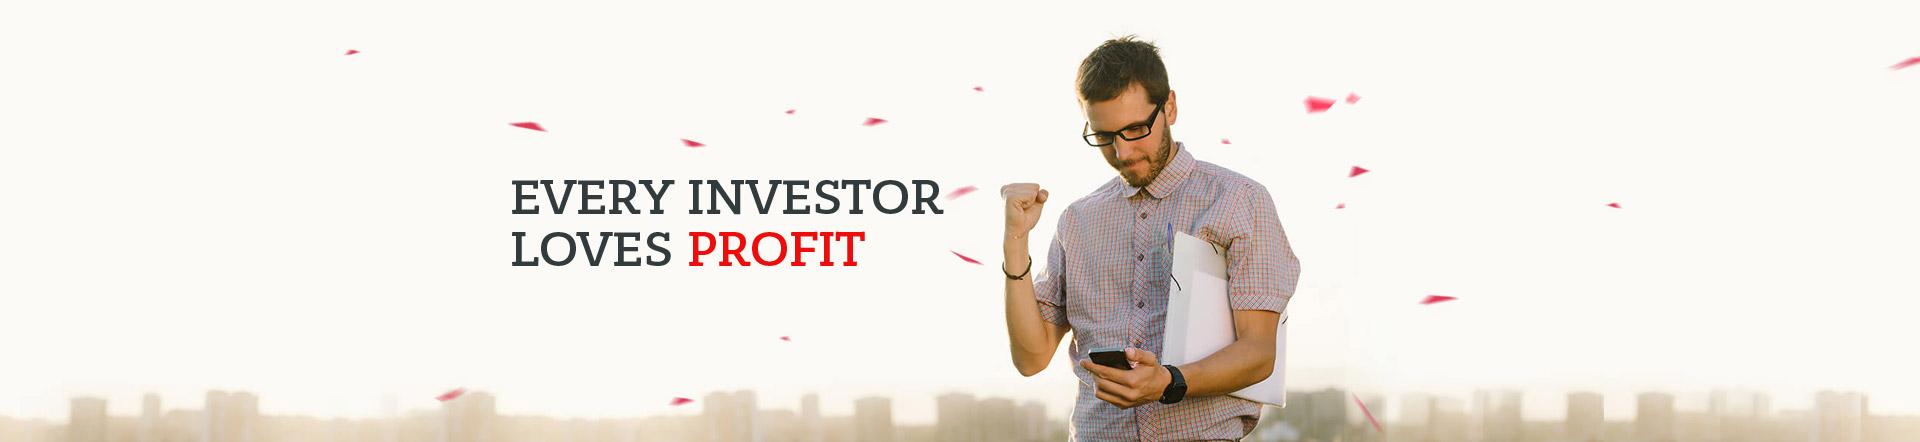 Every investor loves Profit